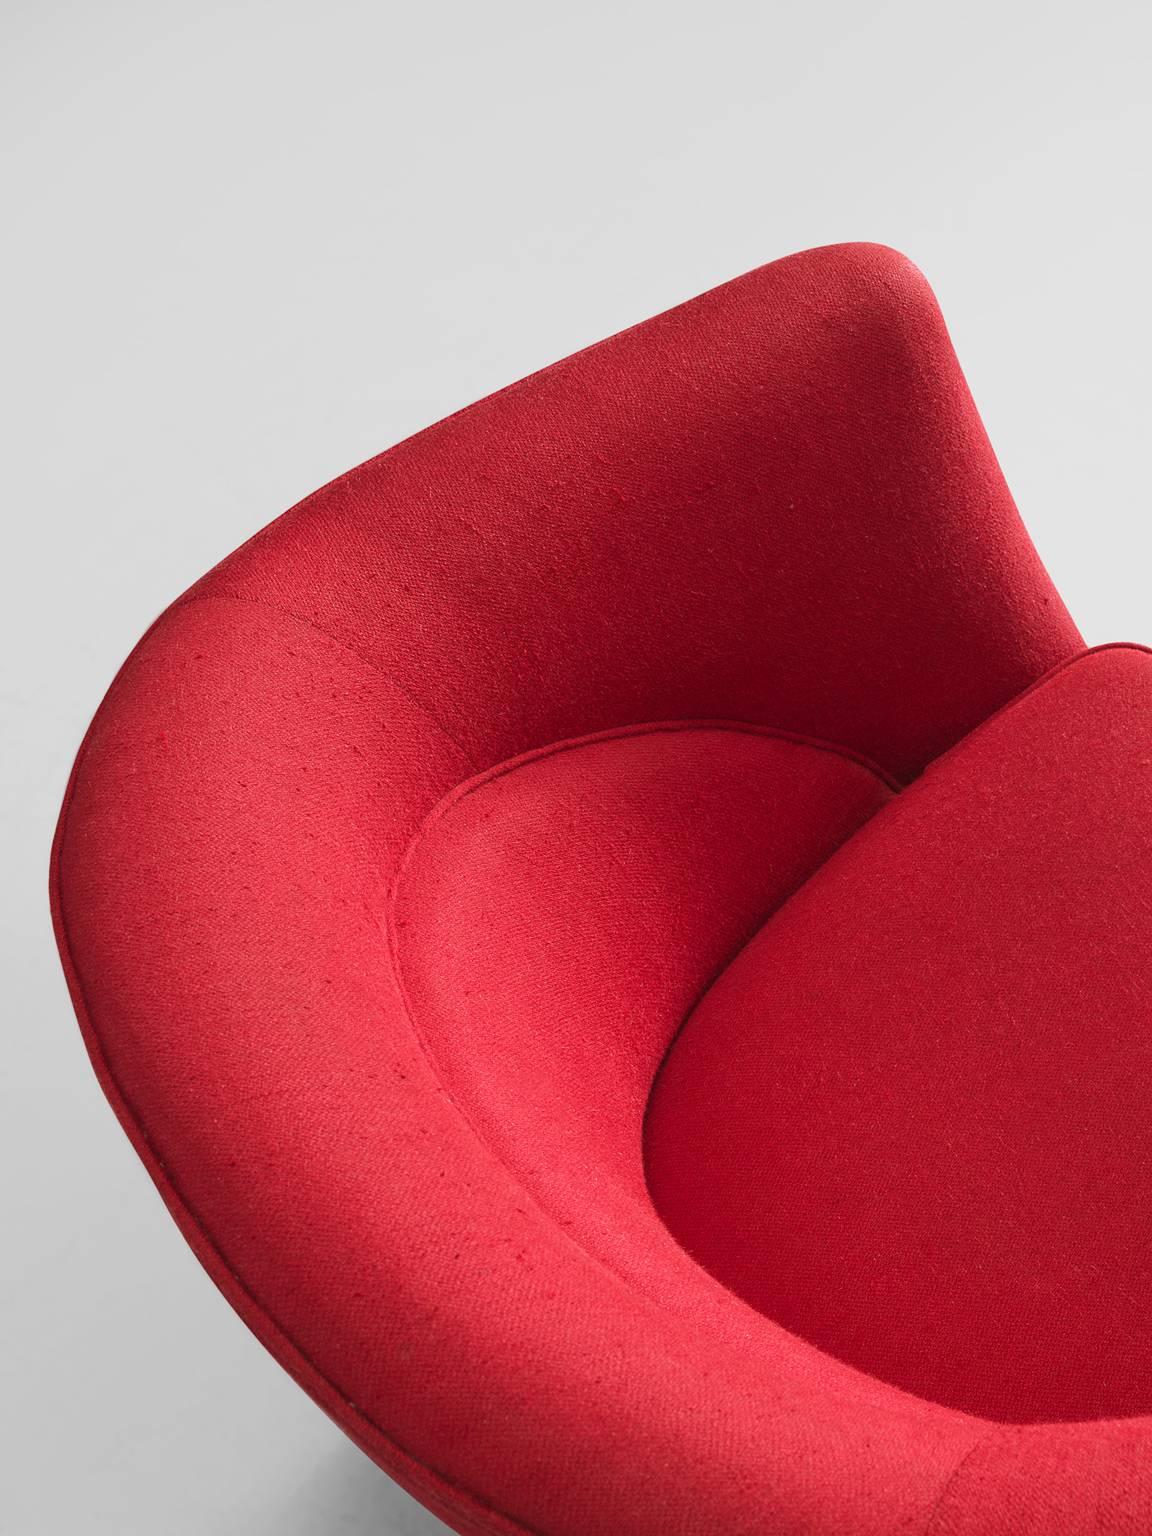 Fabric Guglielmo Veronesi Pair of High Back Easy Chairs